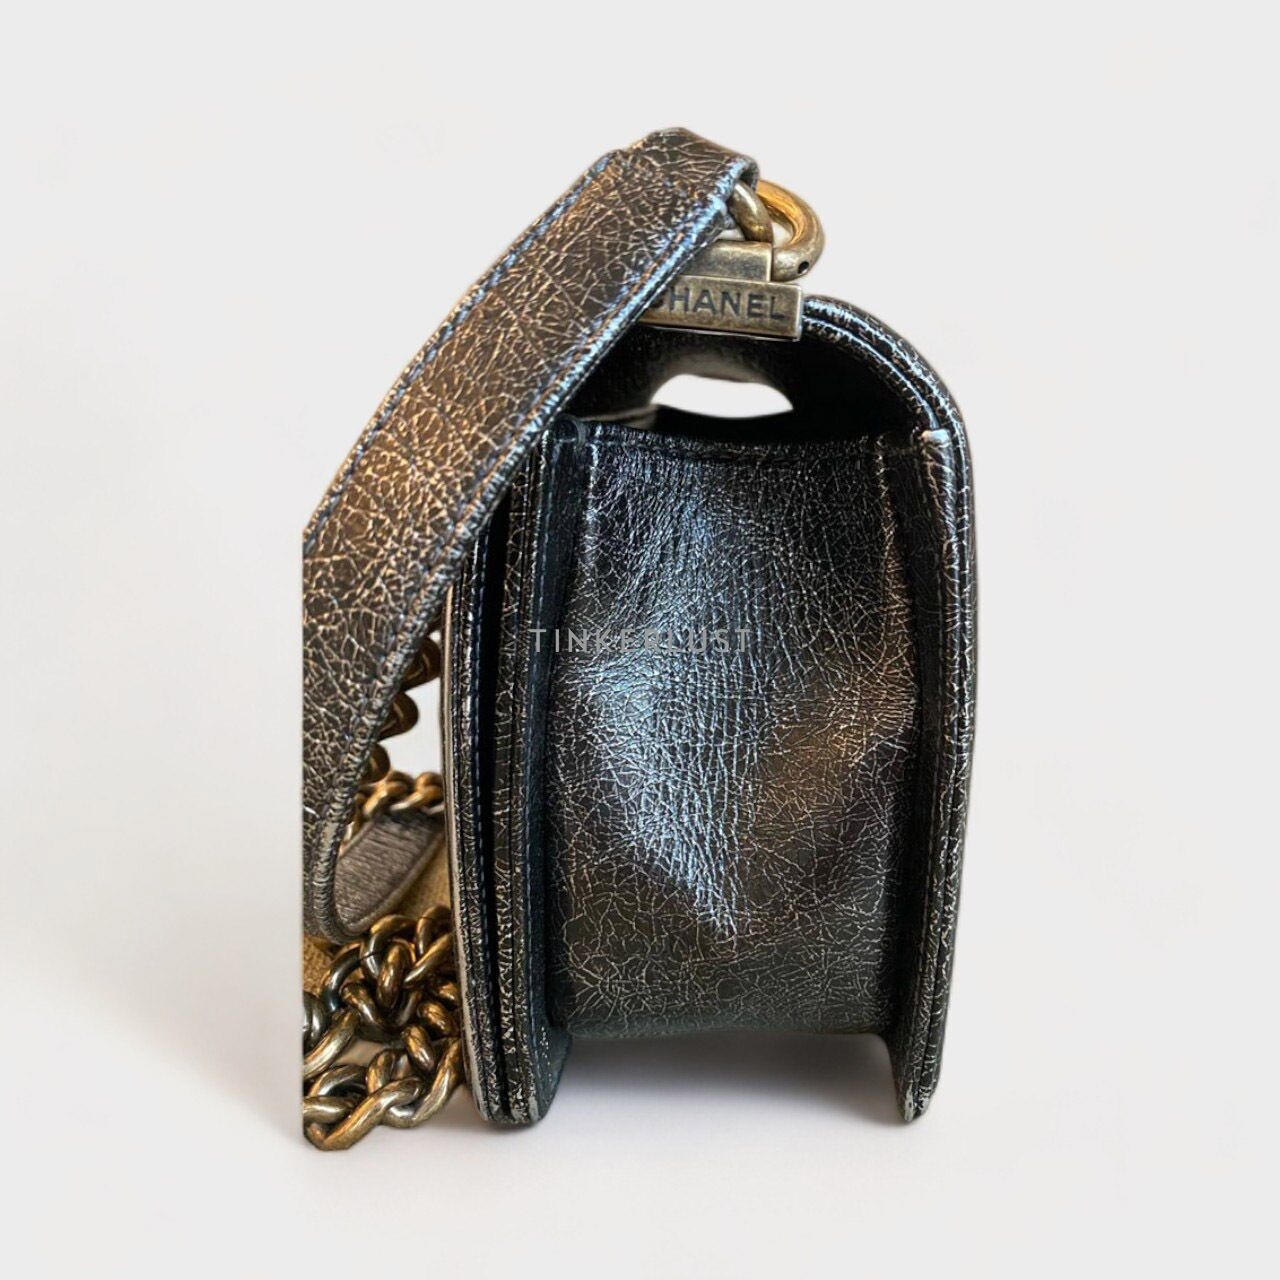 Chanel Boy Medium Black Metallic Cracked Leather Aged GHW #24 Shoulder Bag